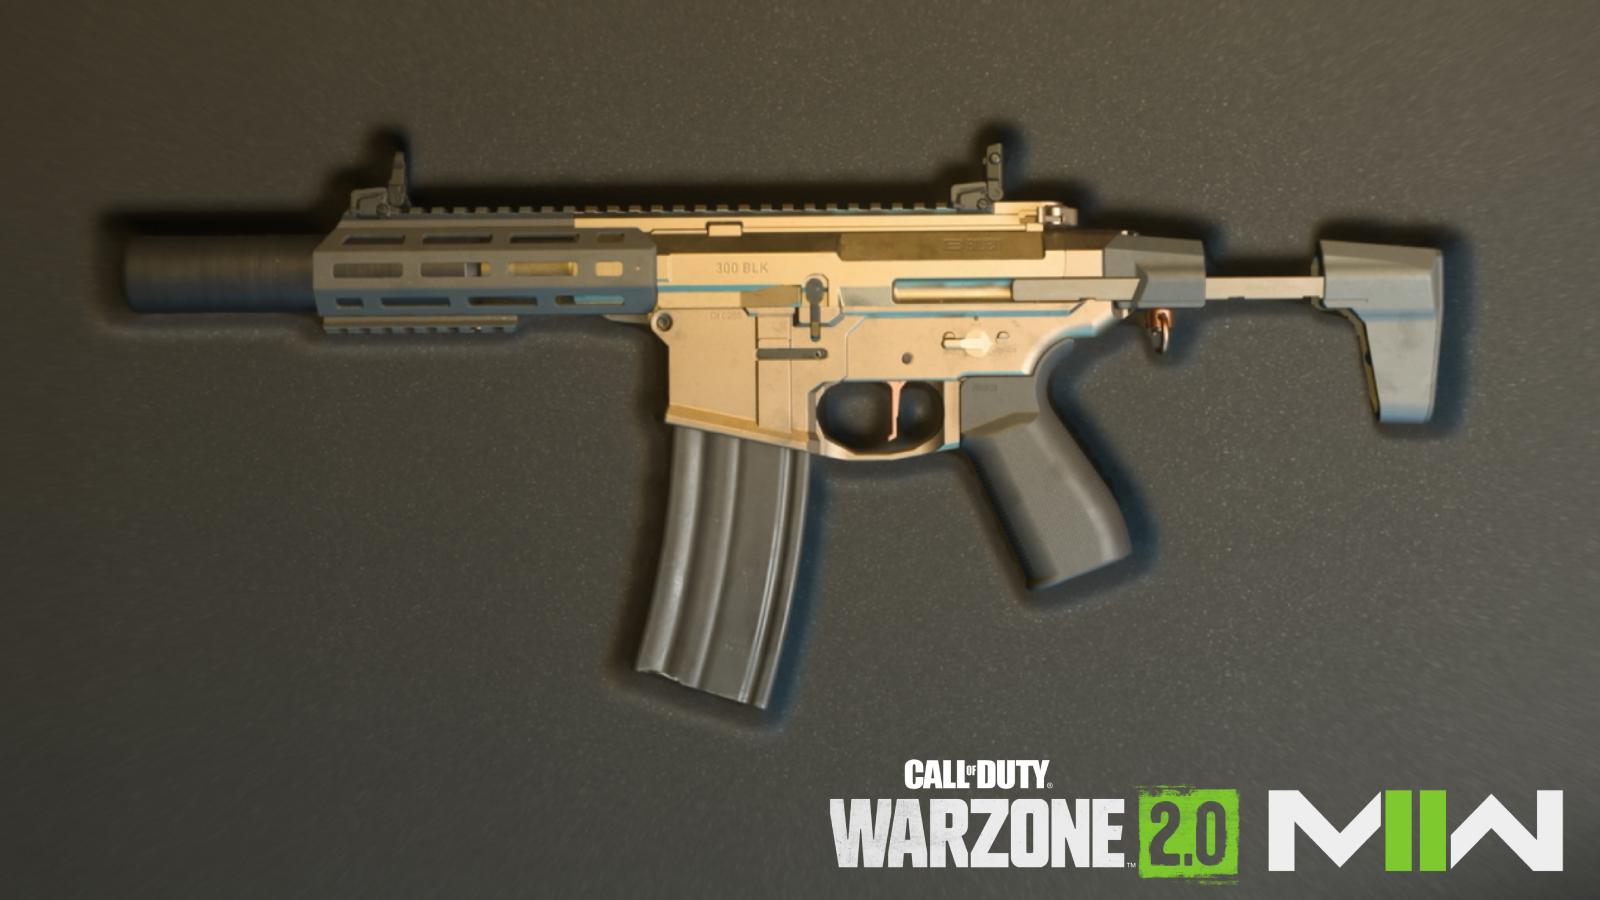 Chimera assault rifle in Modern Warfare 2